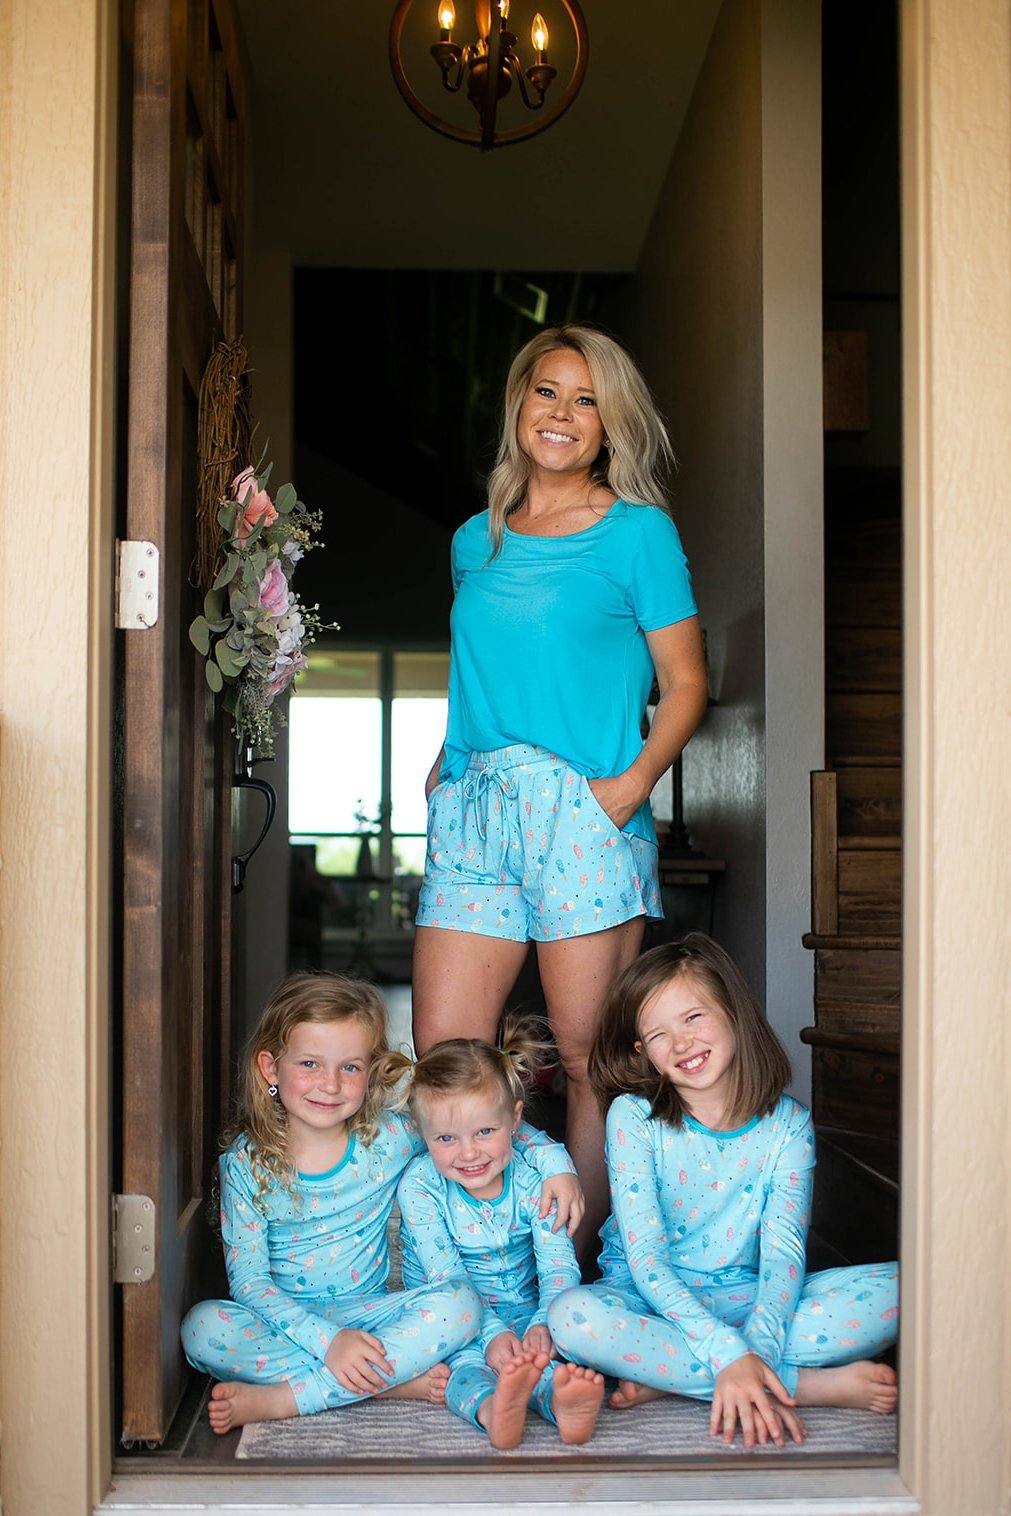 Aqua Popsicles Women's Short Sleeve & Shorts Pajama Set - Free Birdees